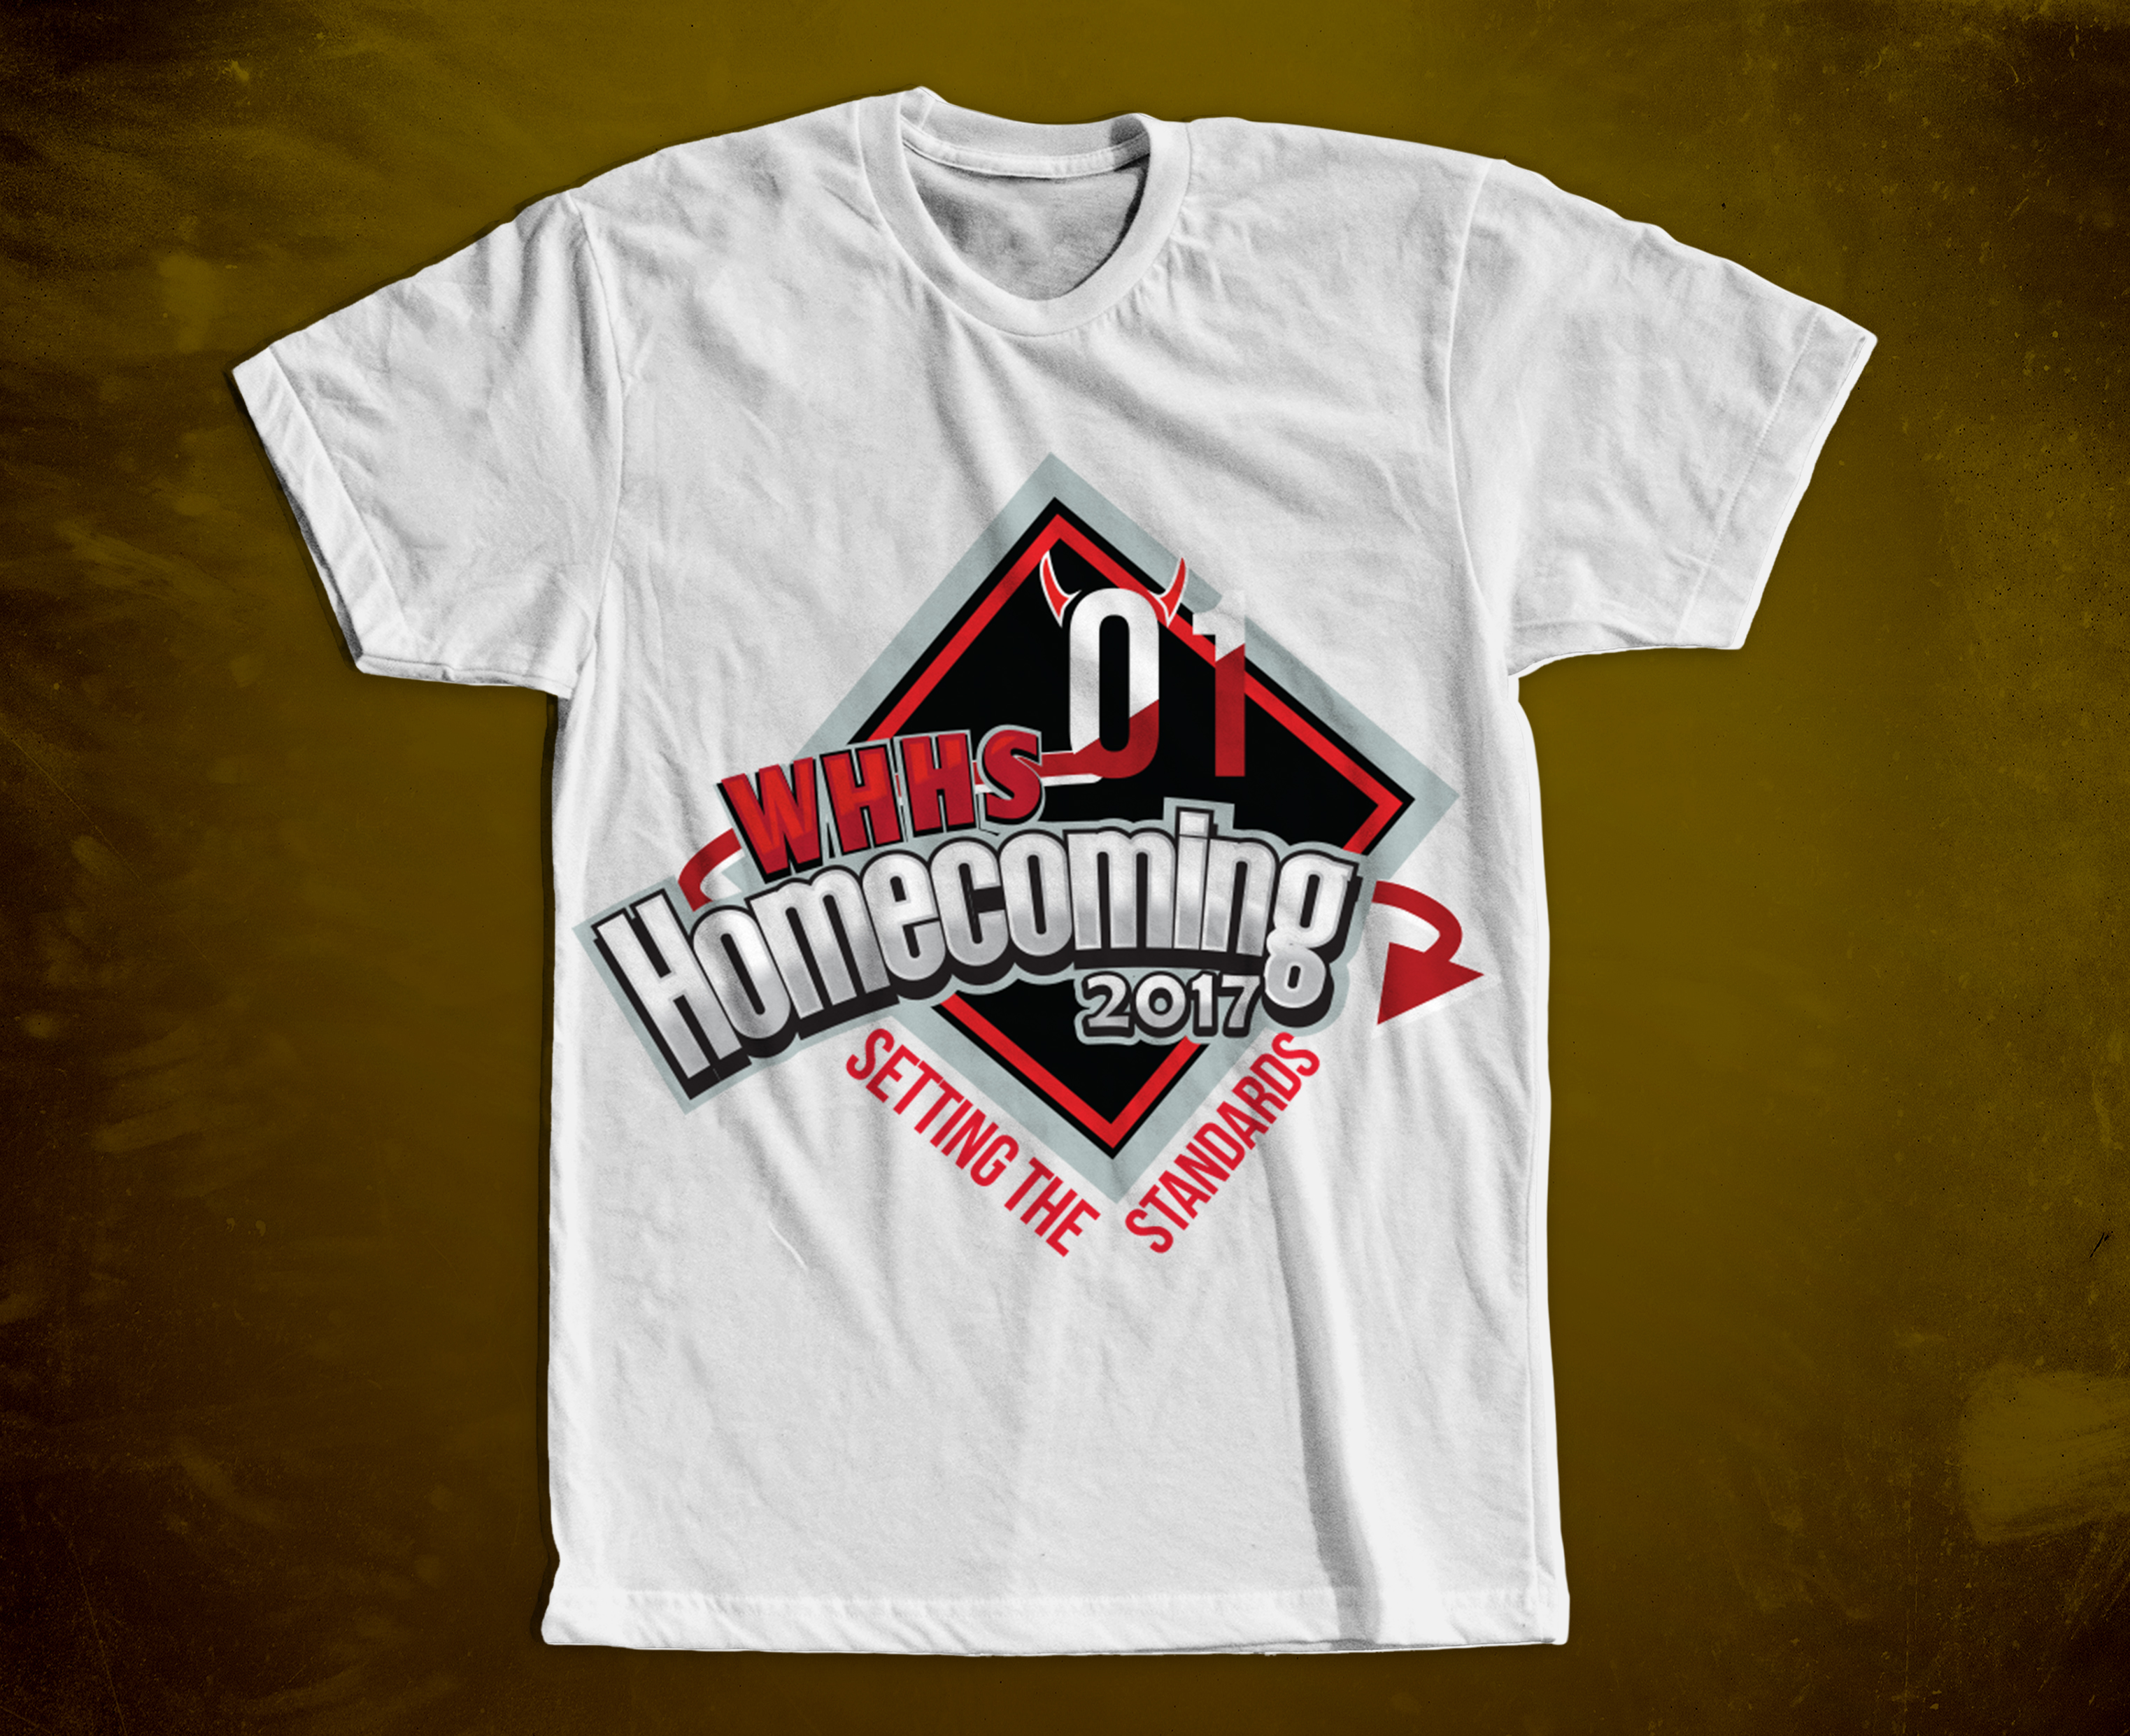 WHHS Homecoming Shirt Design